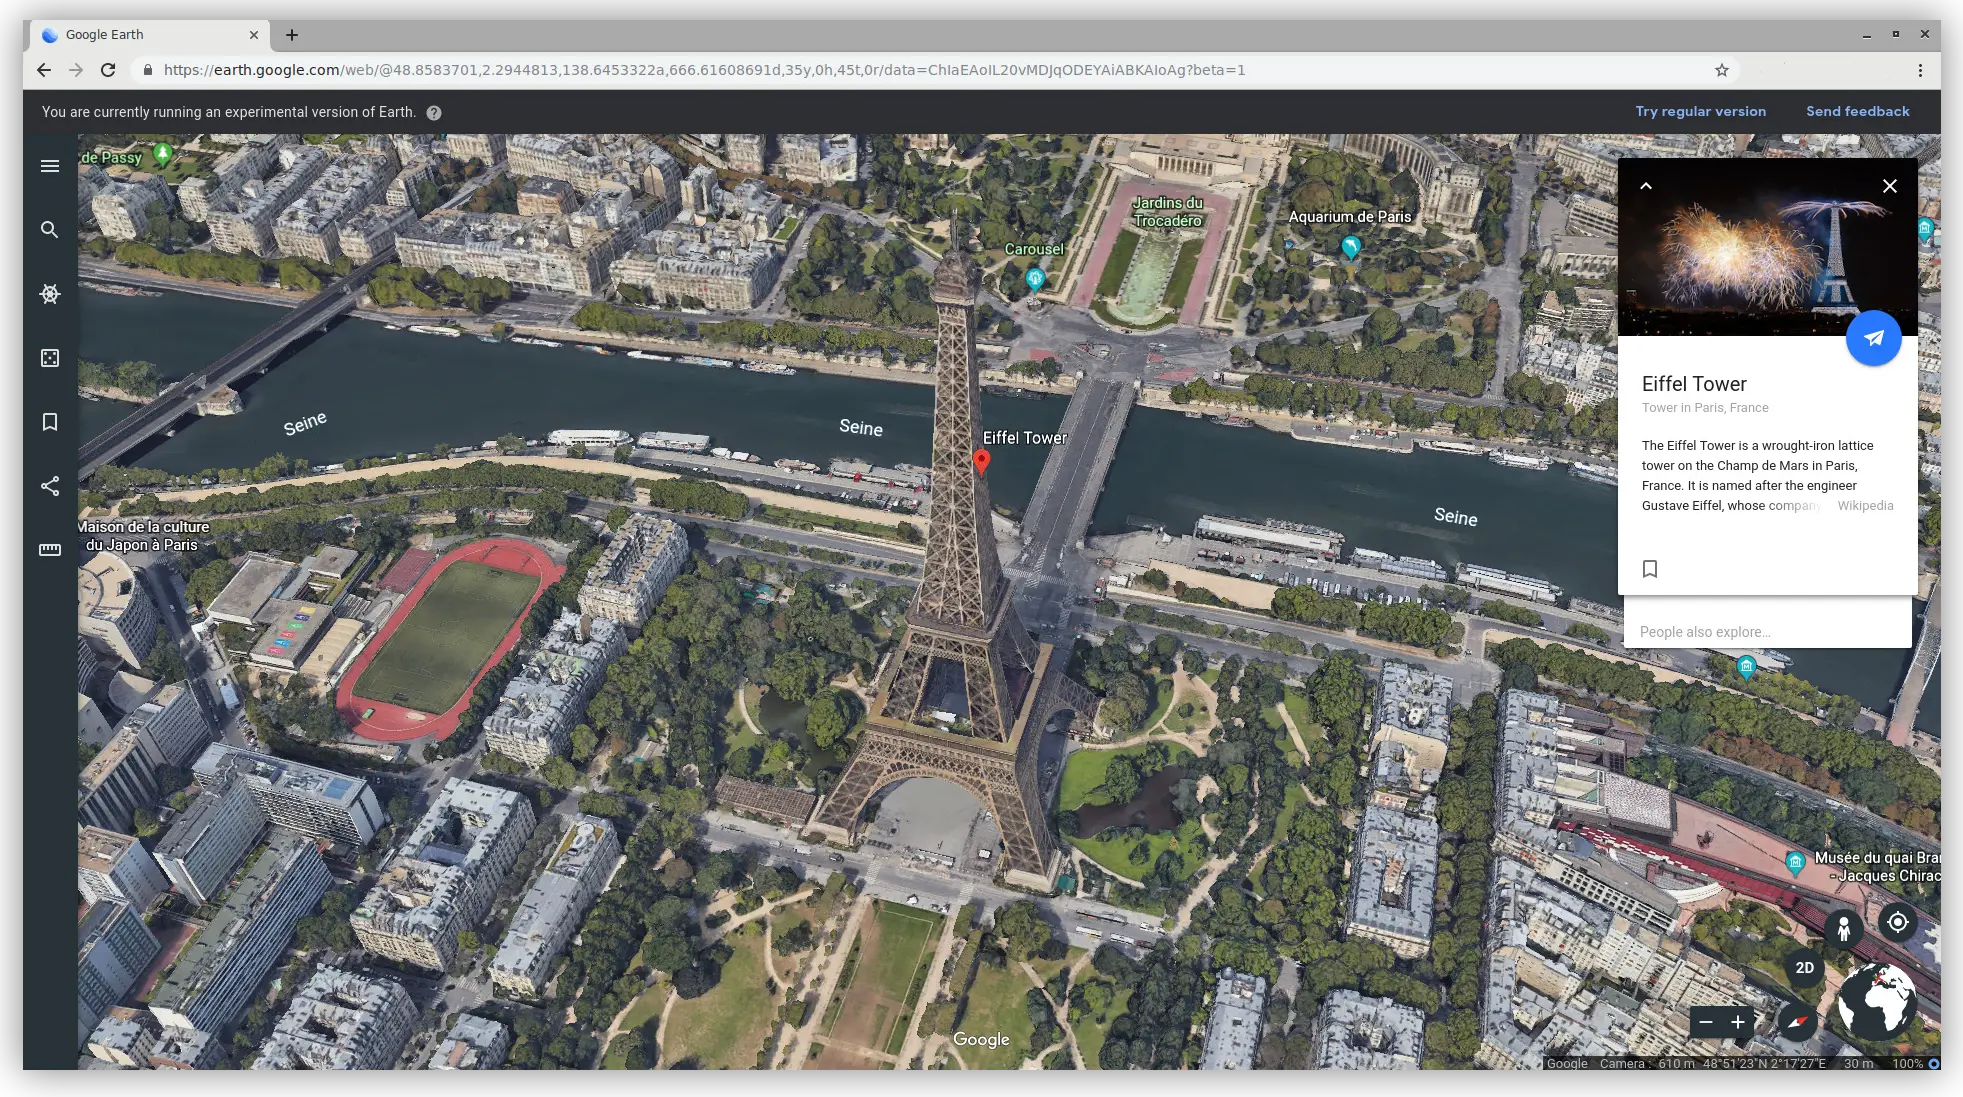 A screenshot of Earth showing Eiffel Tower